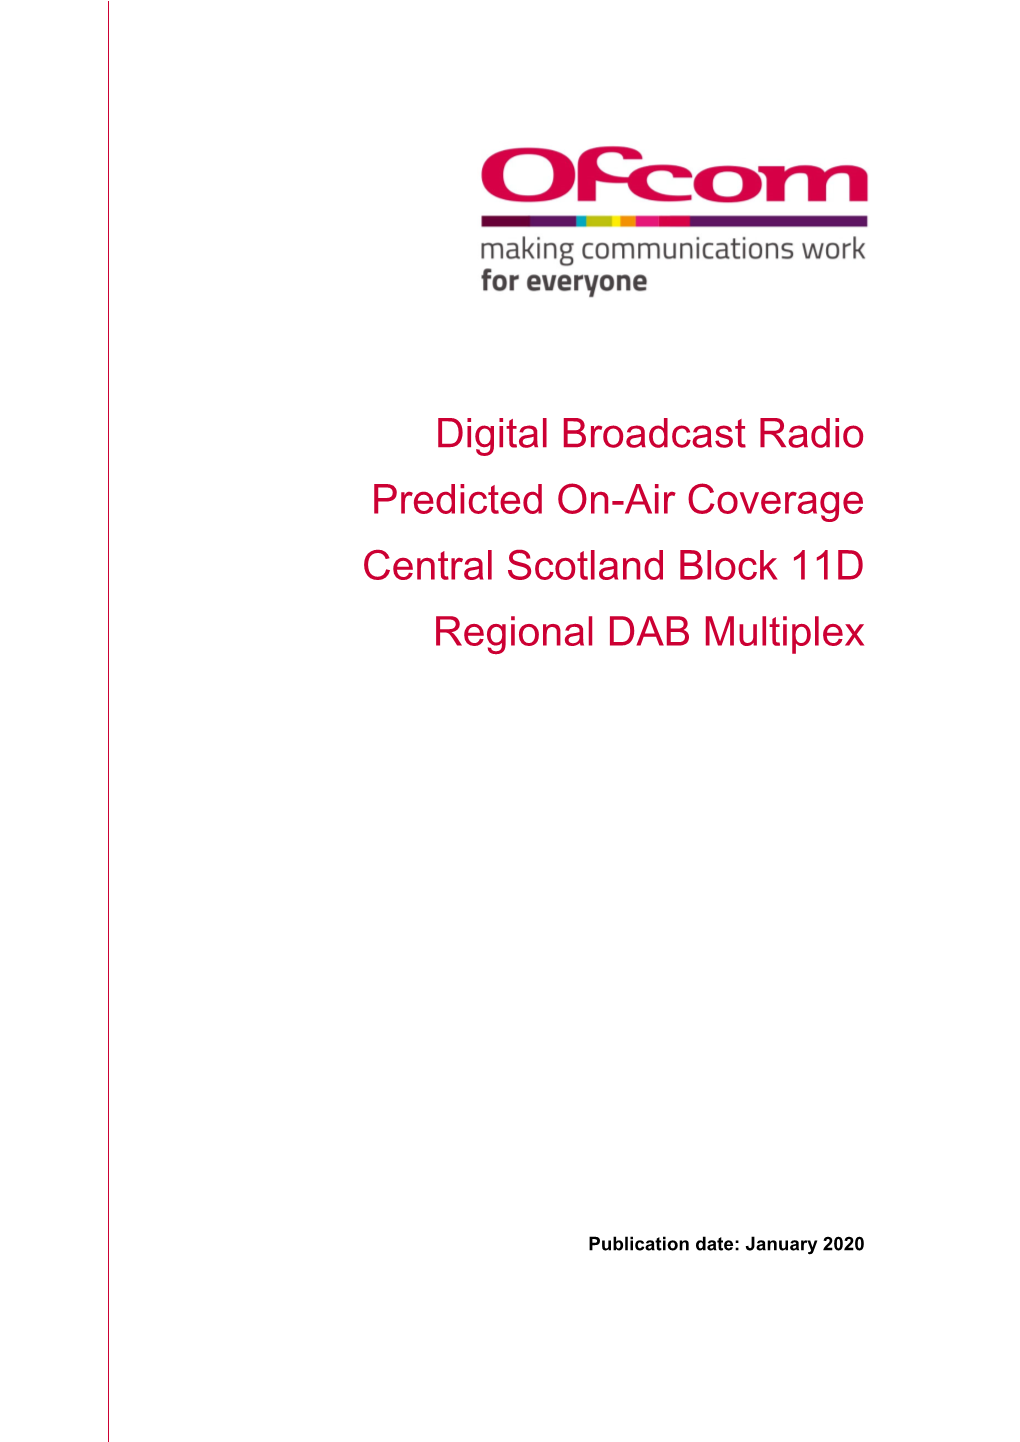 Digital Broadcast Radio Predicted On-Air Coverage Central Scotland Block 11D Regional DAB Multiplex